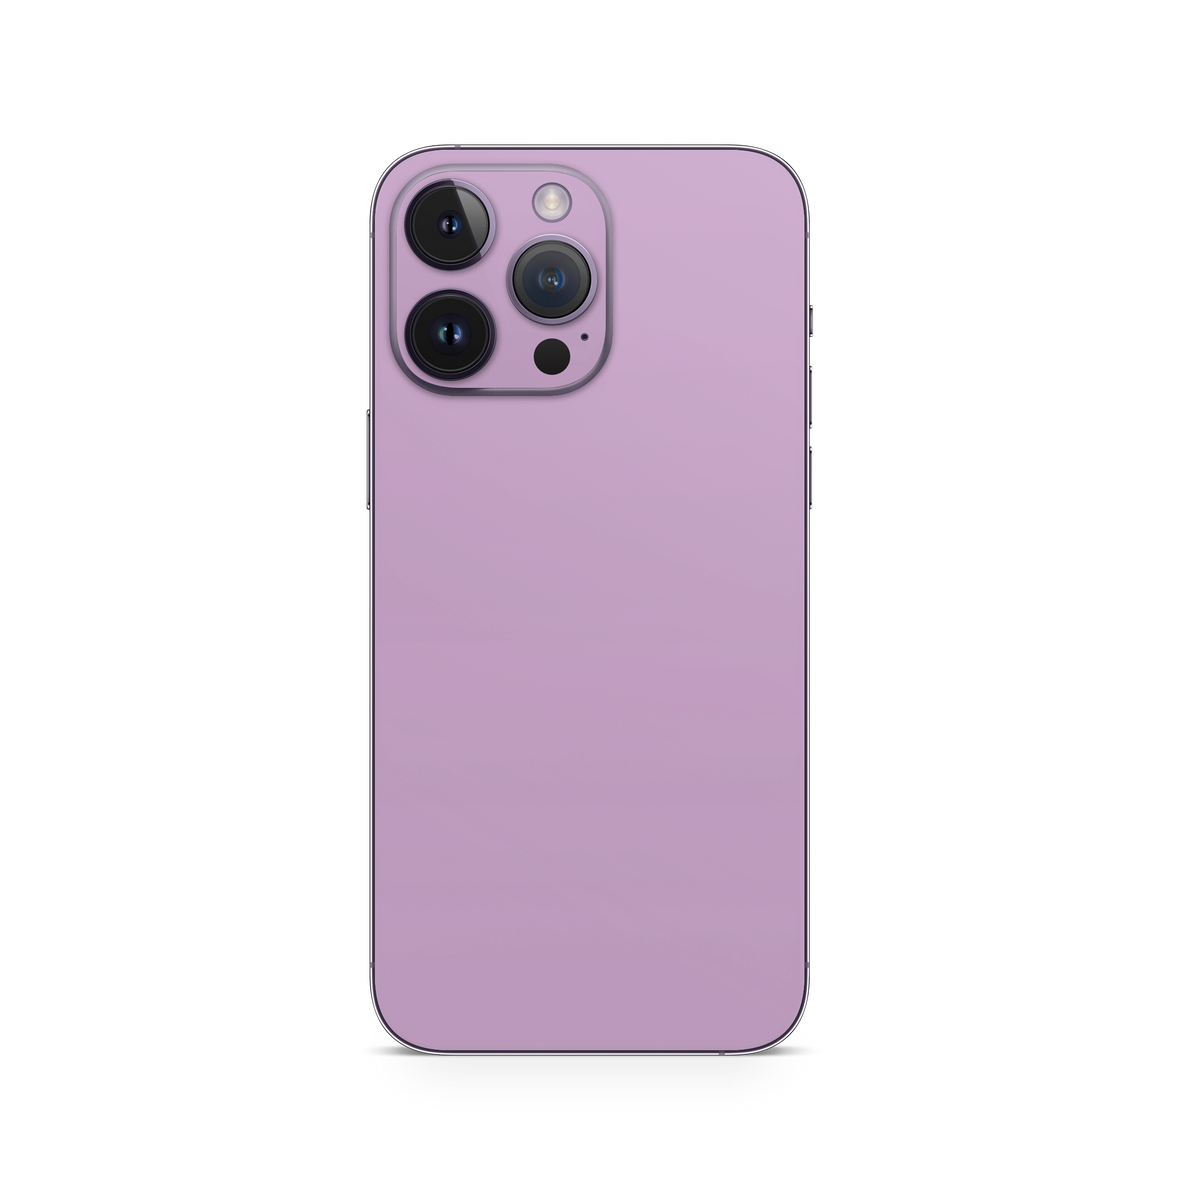 Apple iPhone Soft Lilac Skin